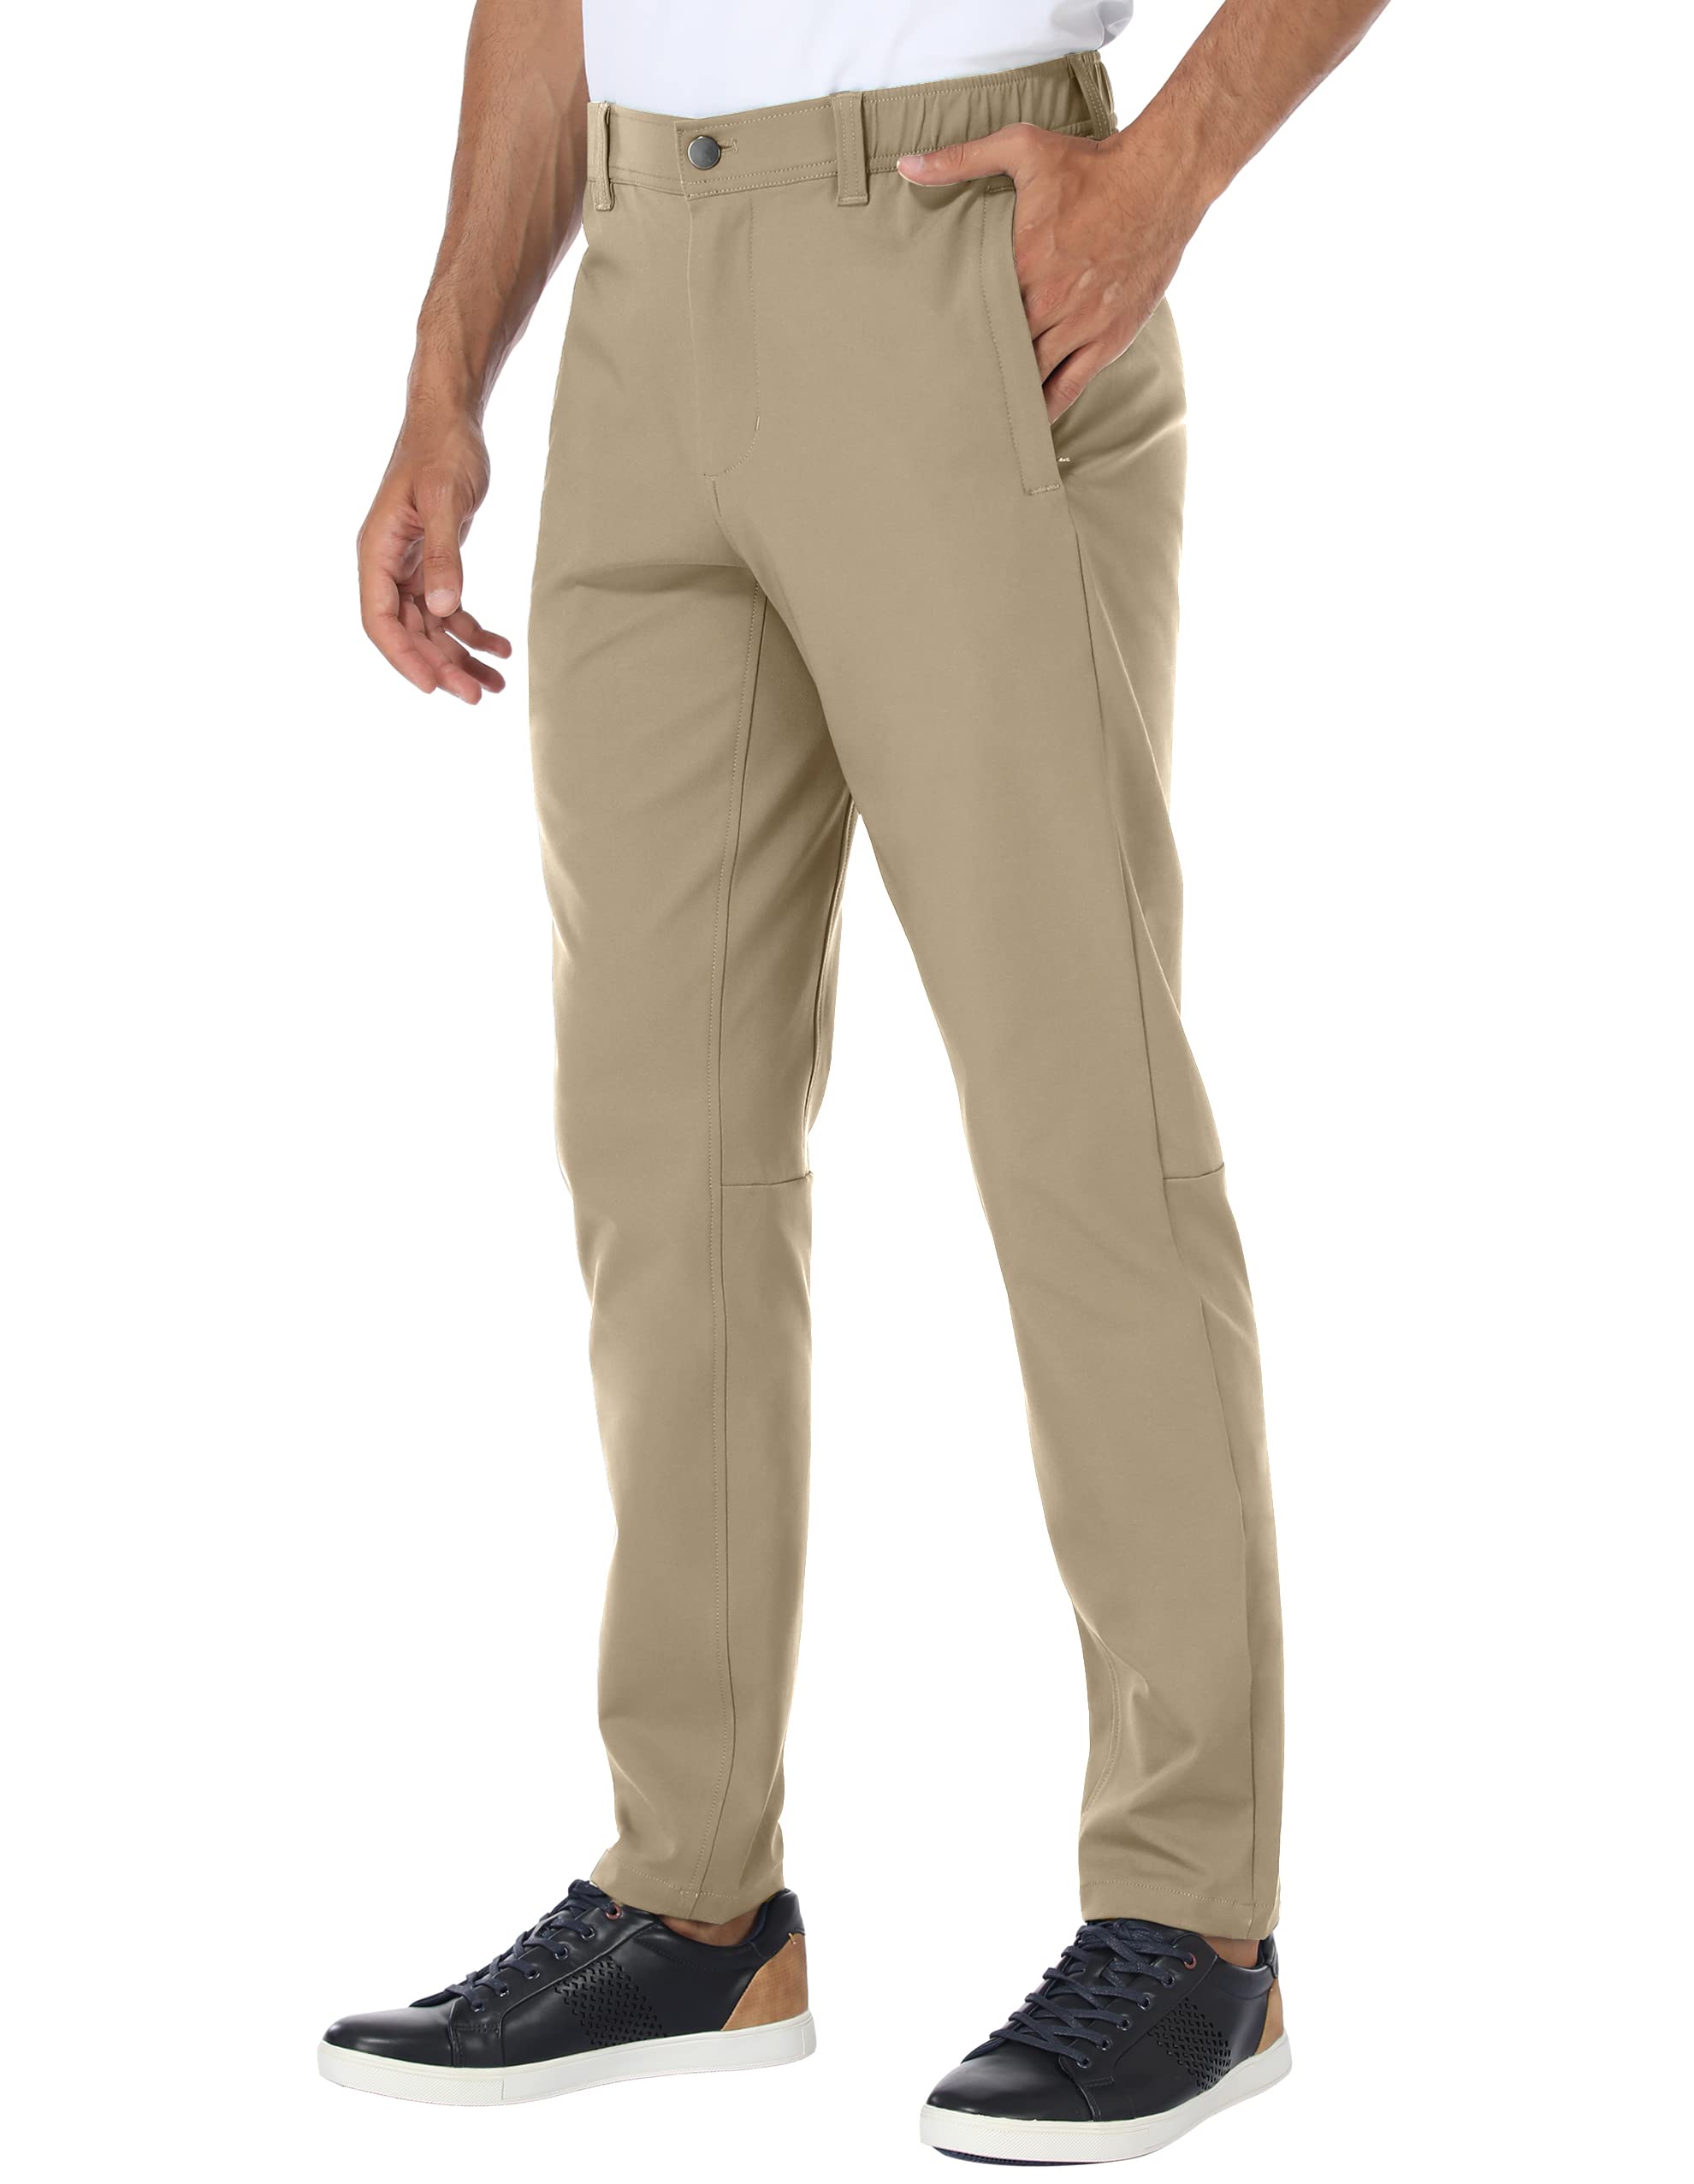 PULI Golf Pants Men Stretch Slim Fit Dress Casual Work Hiking